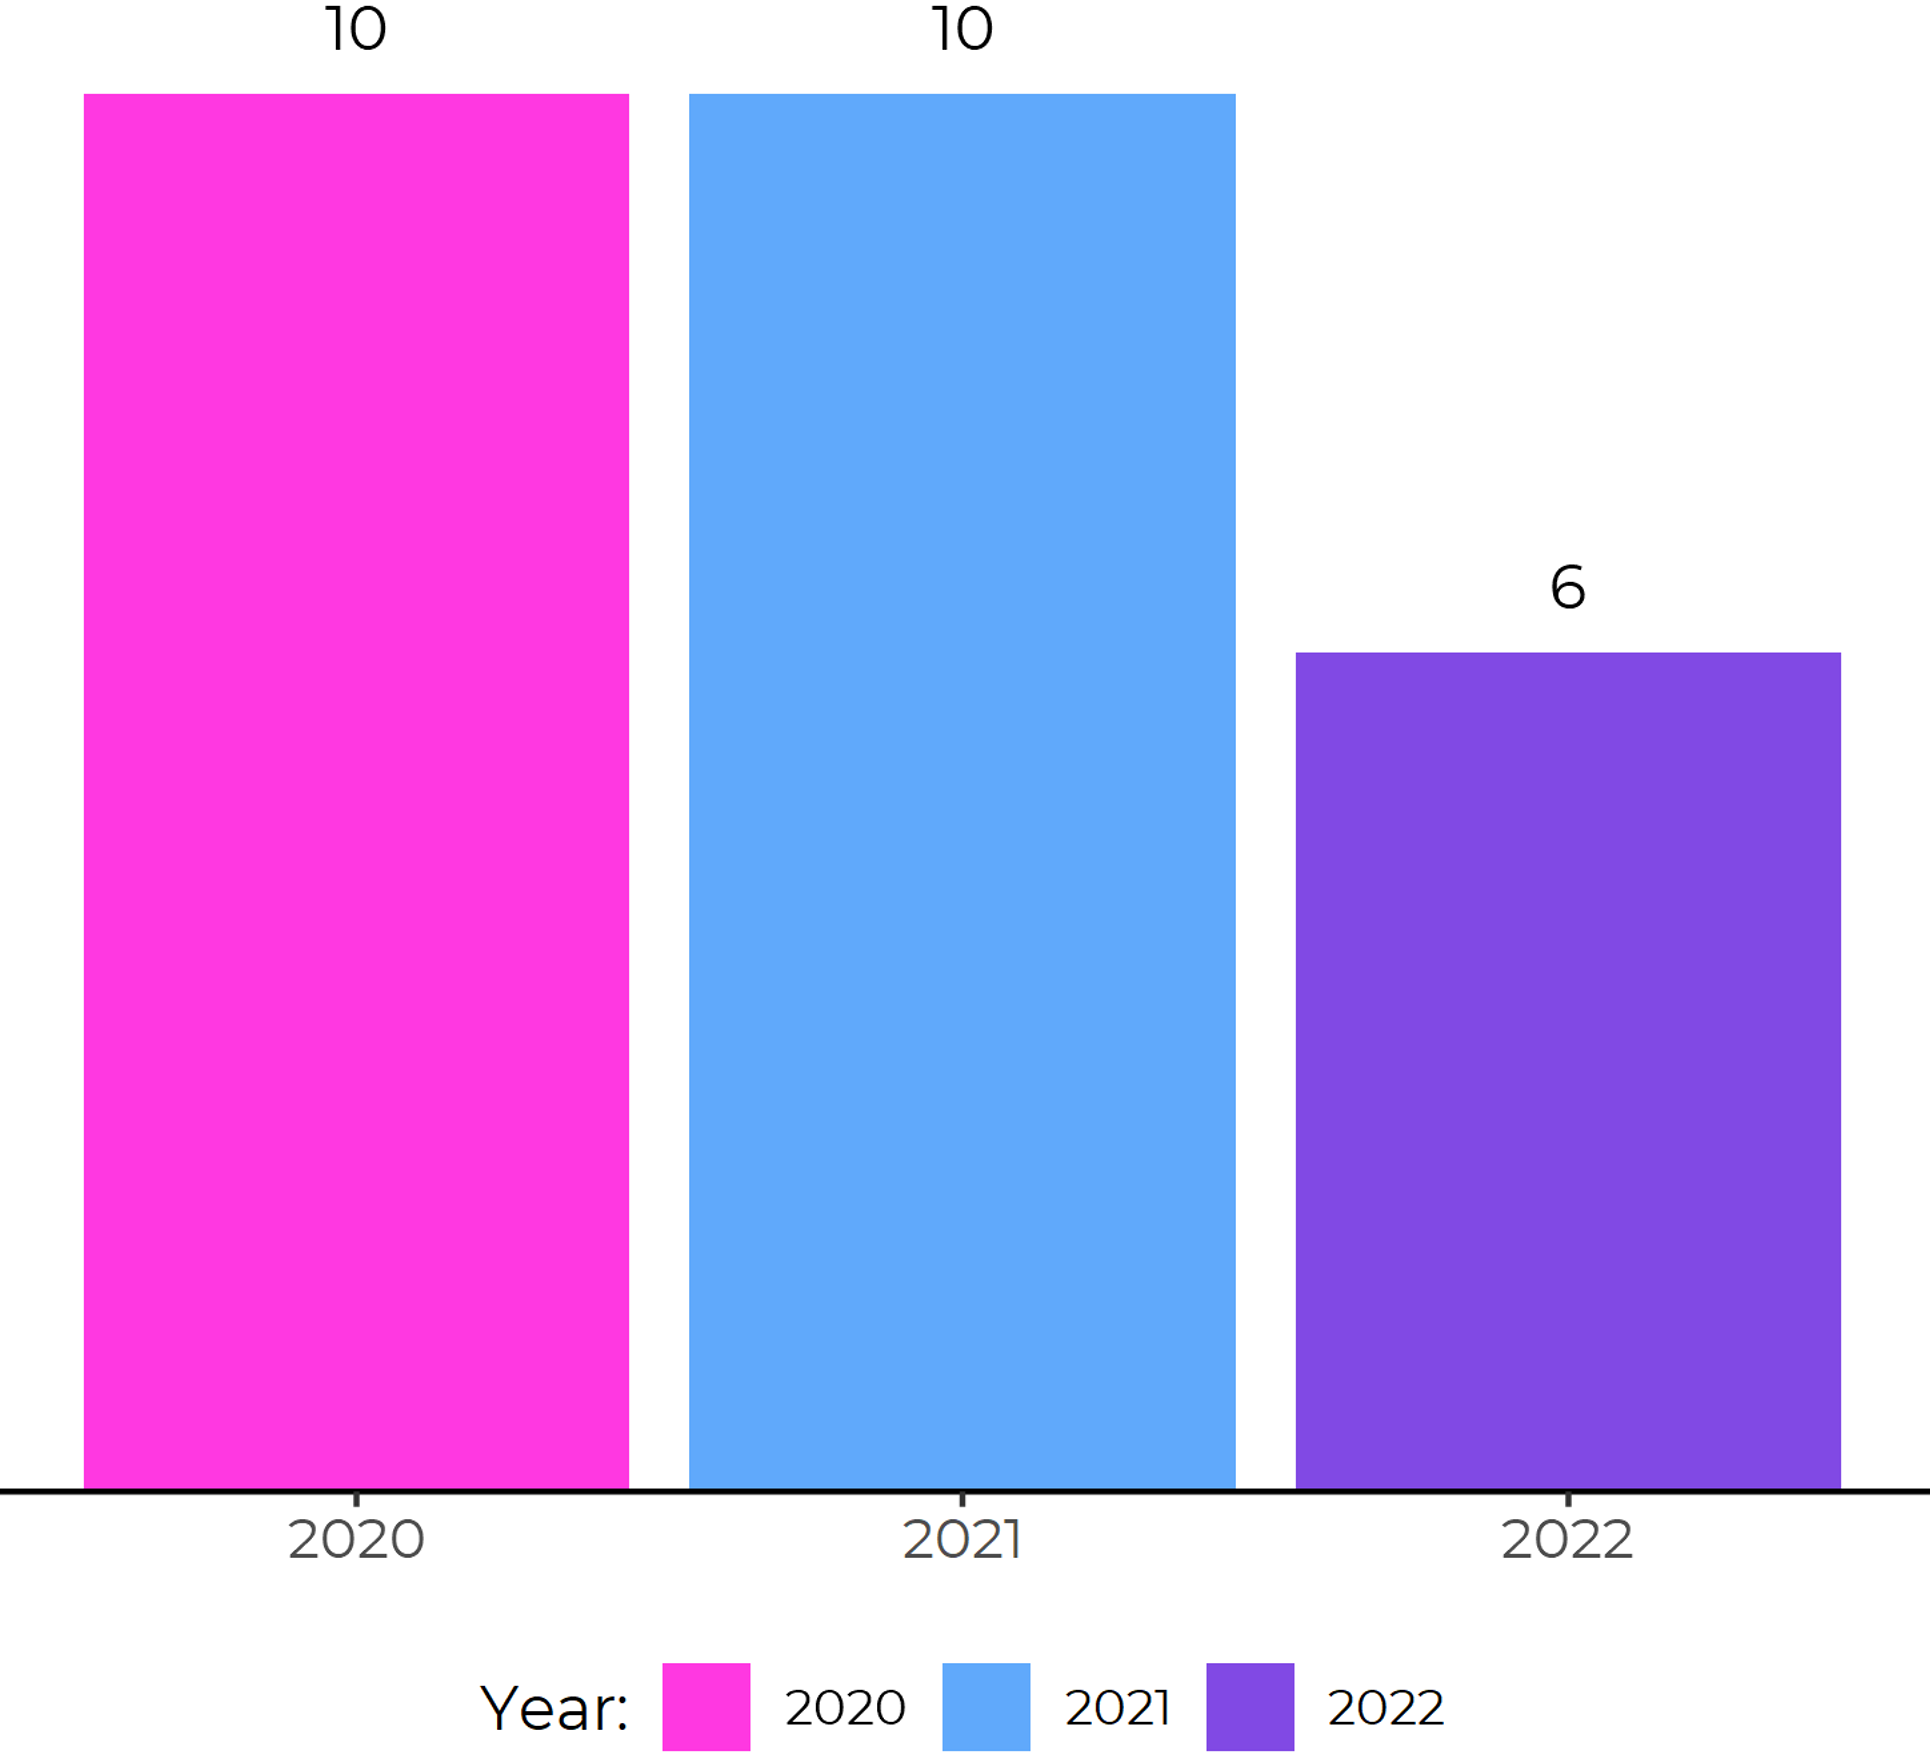 Graph illustrating UX job postings by NGOs. Between in 2020and 2021 there were 10 job postings and in 2022 there were 6 job postings.